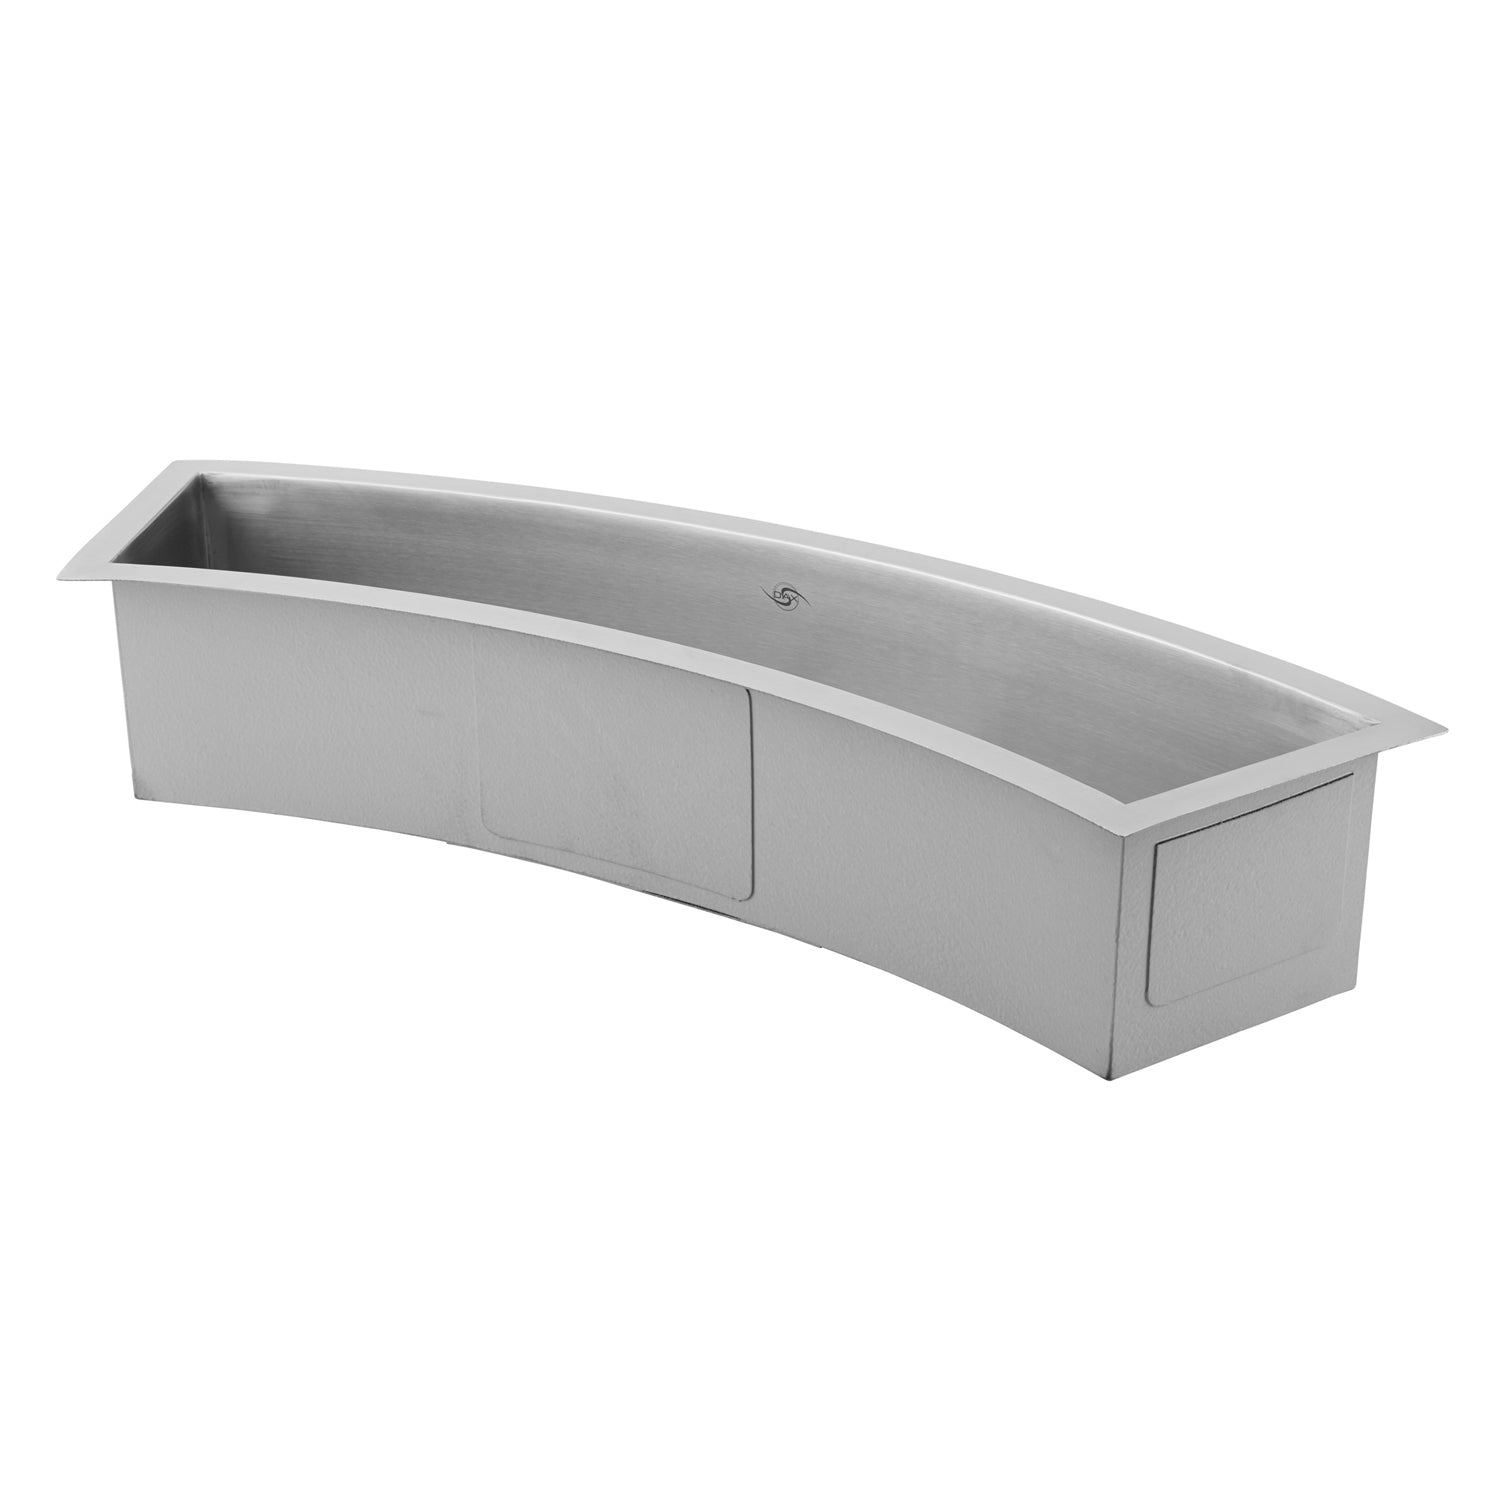 DAX Handmade Undermount Bar Sink, 16 Gauge Stainless Steel, Brushed Finish, 33 x 8-1/2 x 6 Inches (DAX-SQ-3312-C)